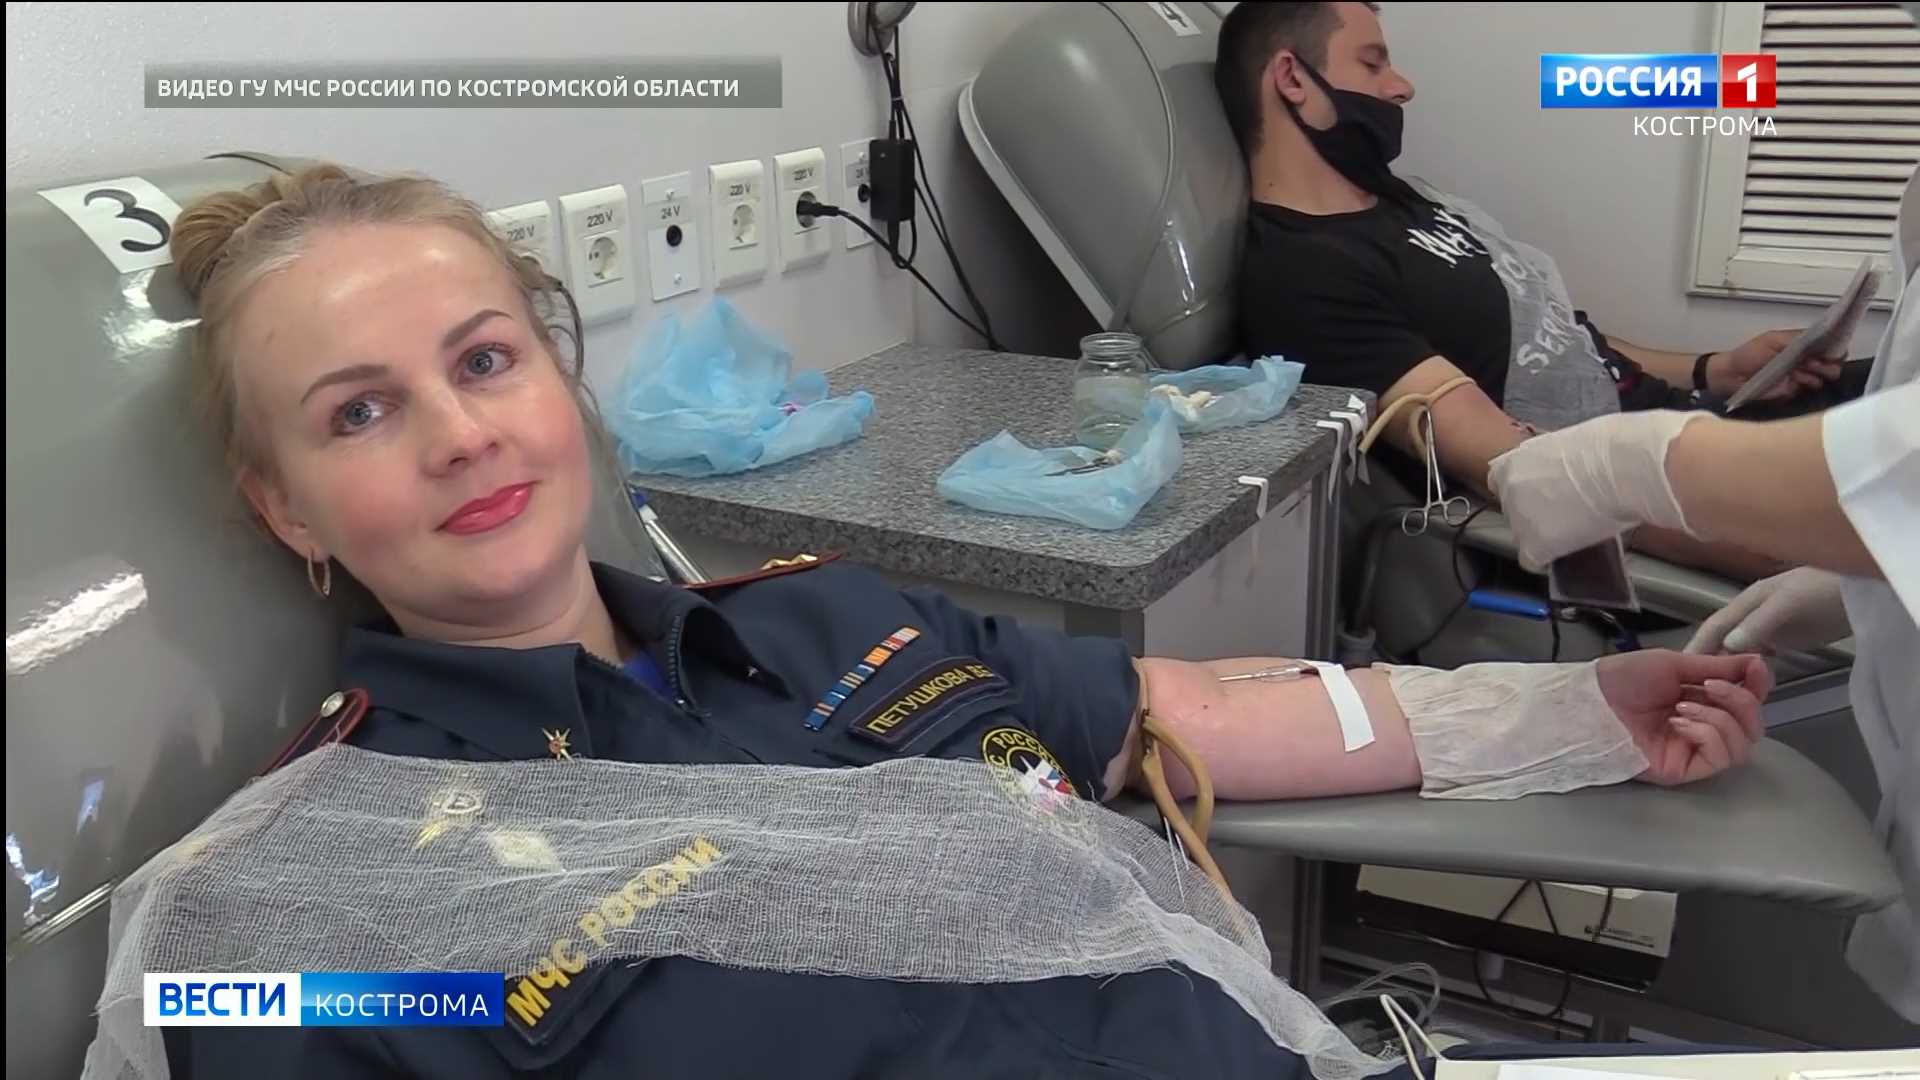 Спасатели за полдня сдали 20 литров крови для костромских больниц